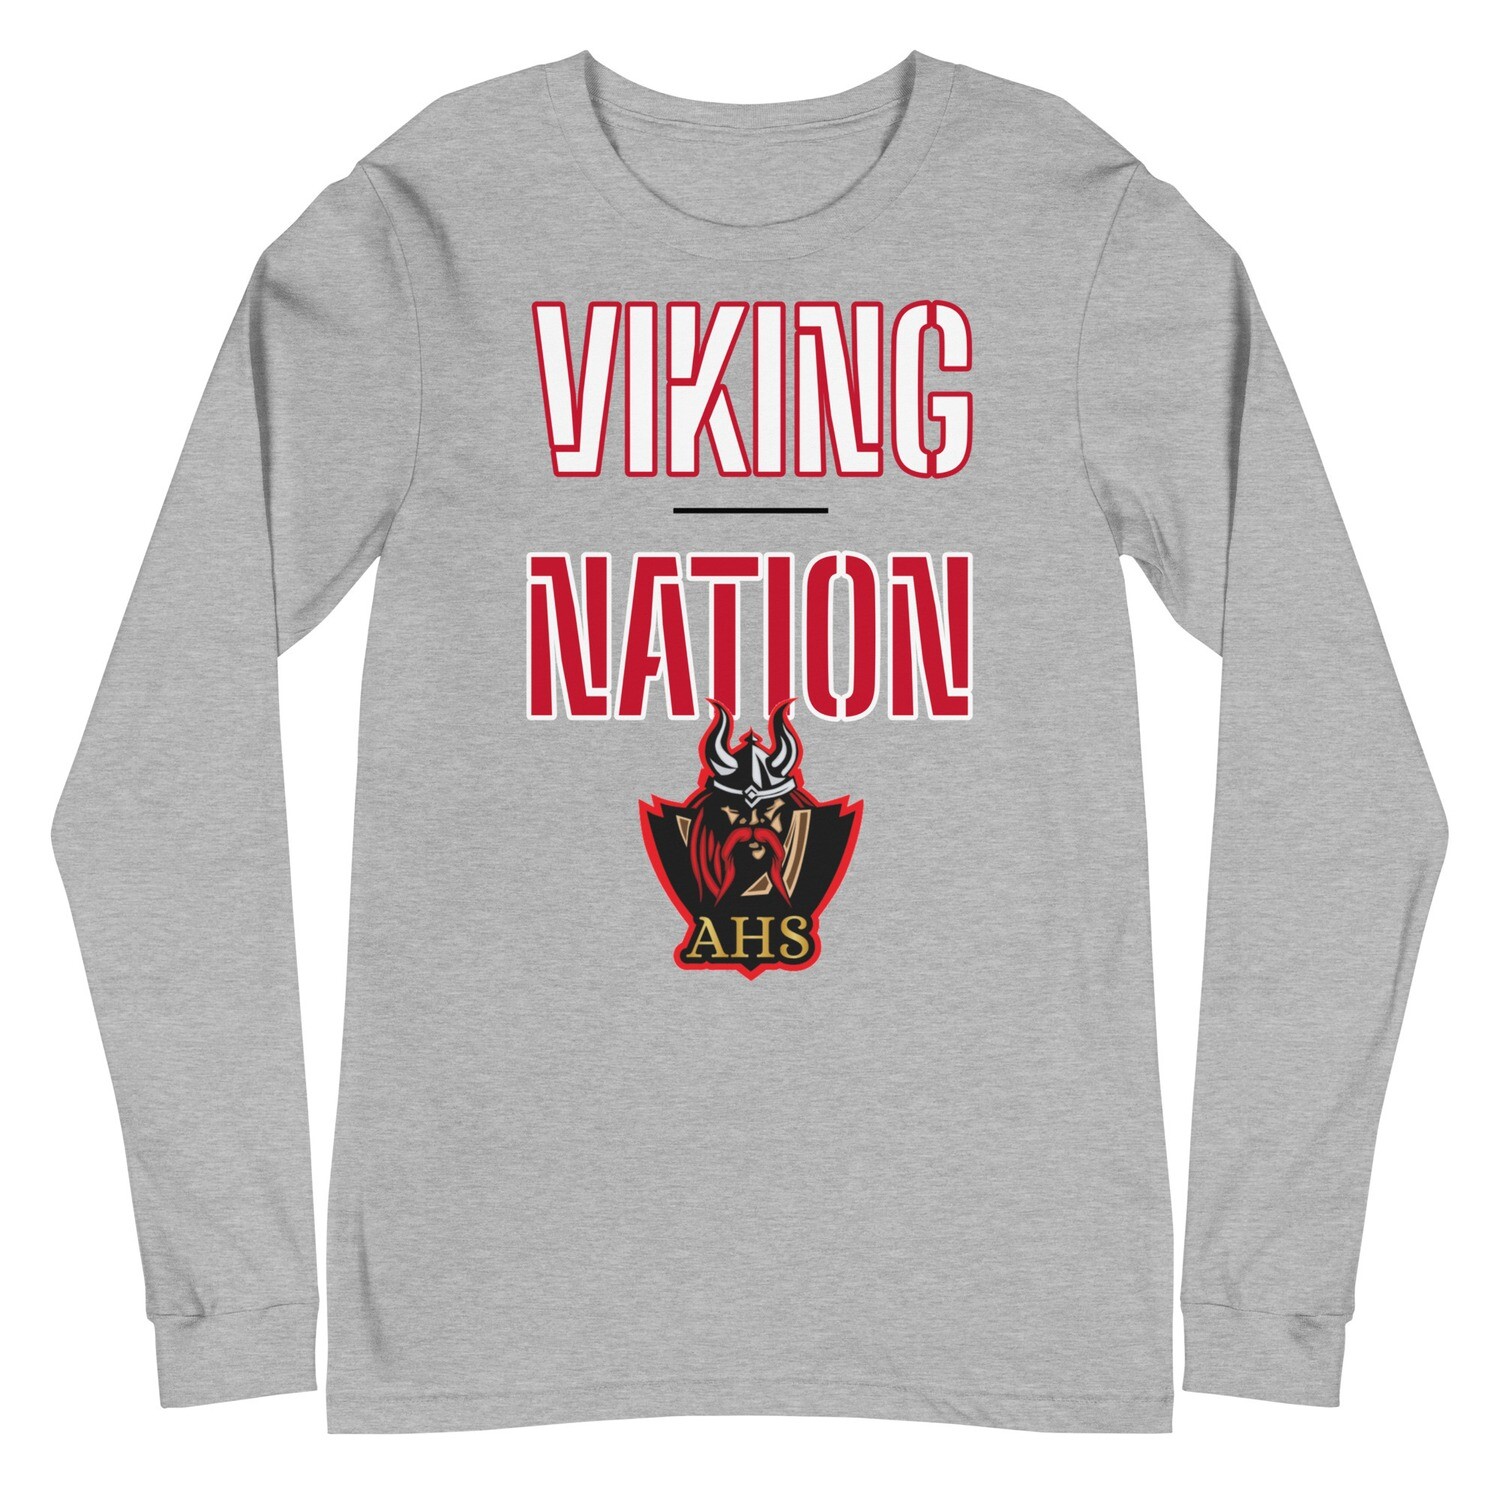 Women's Viking Nation Long Sleeve - Black/Grey